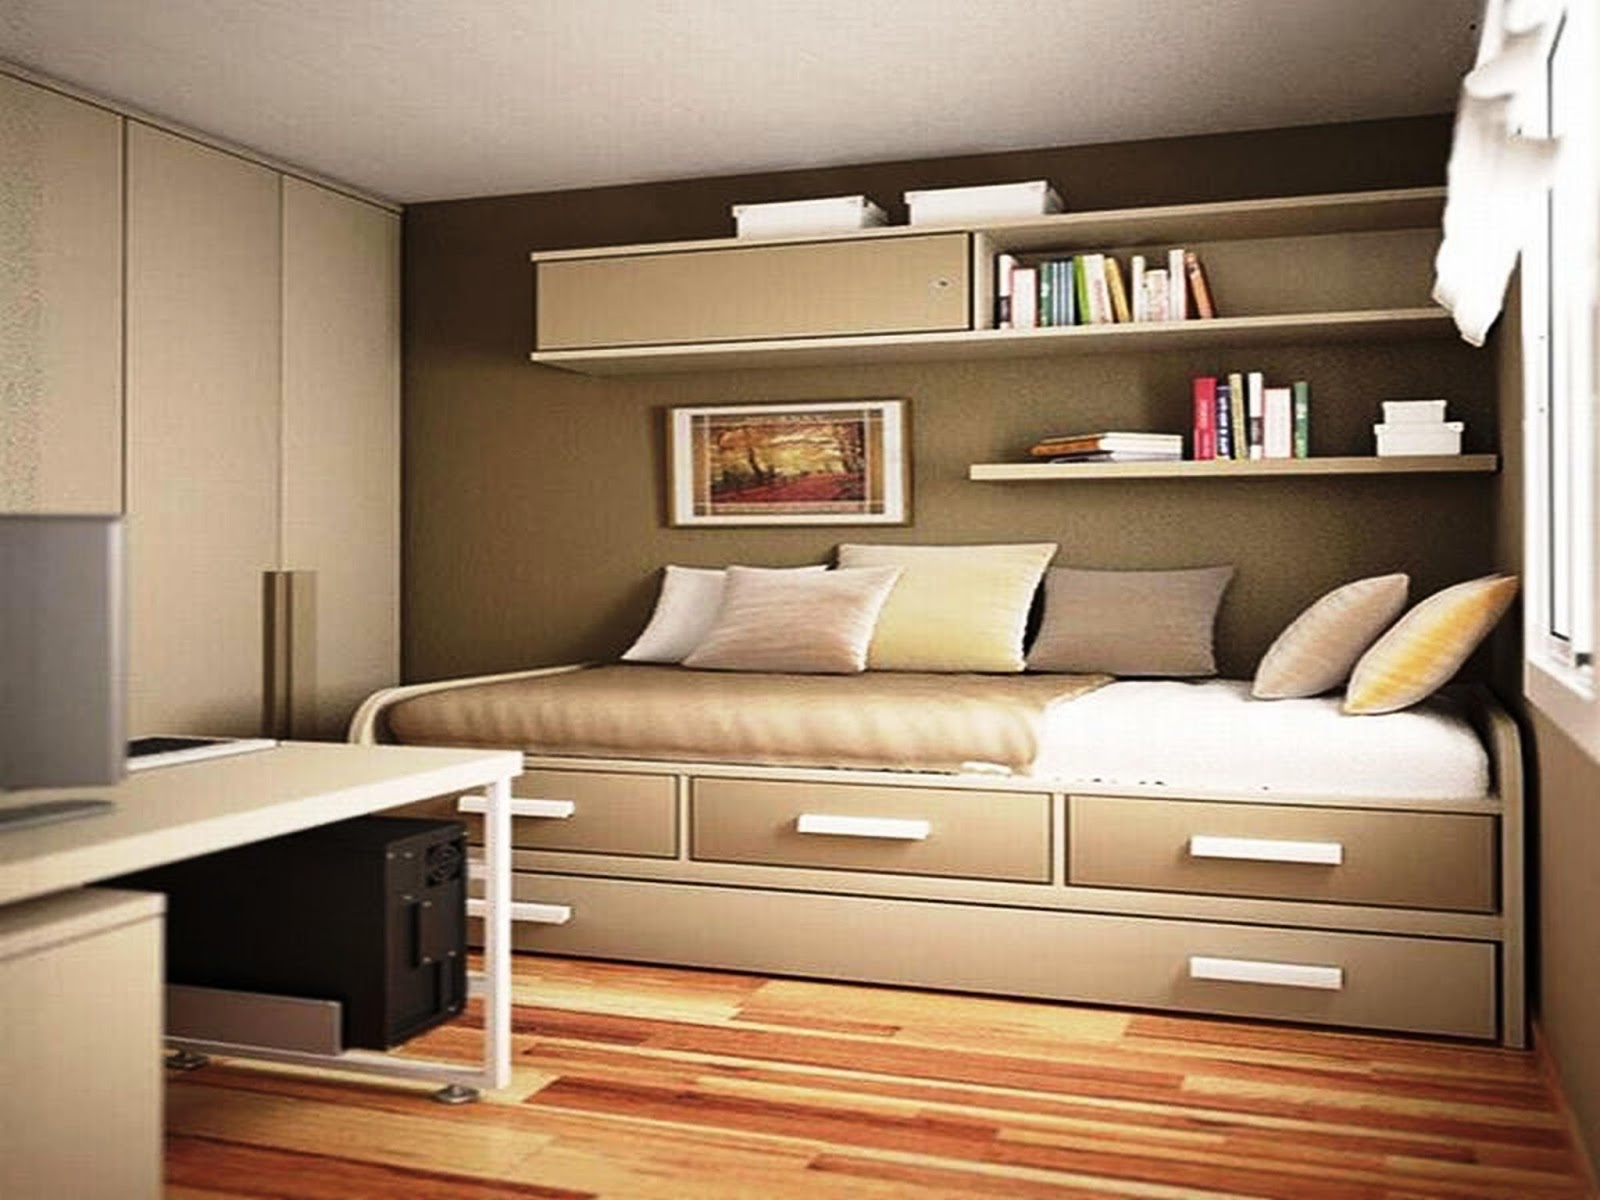 19 Ikea Small Bedroom Design Ideas-7 Ikea Bedroom Designs  Ikea,Small,Bedroom,Design,Ideas